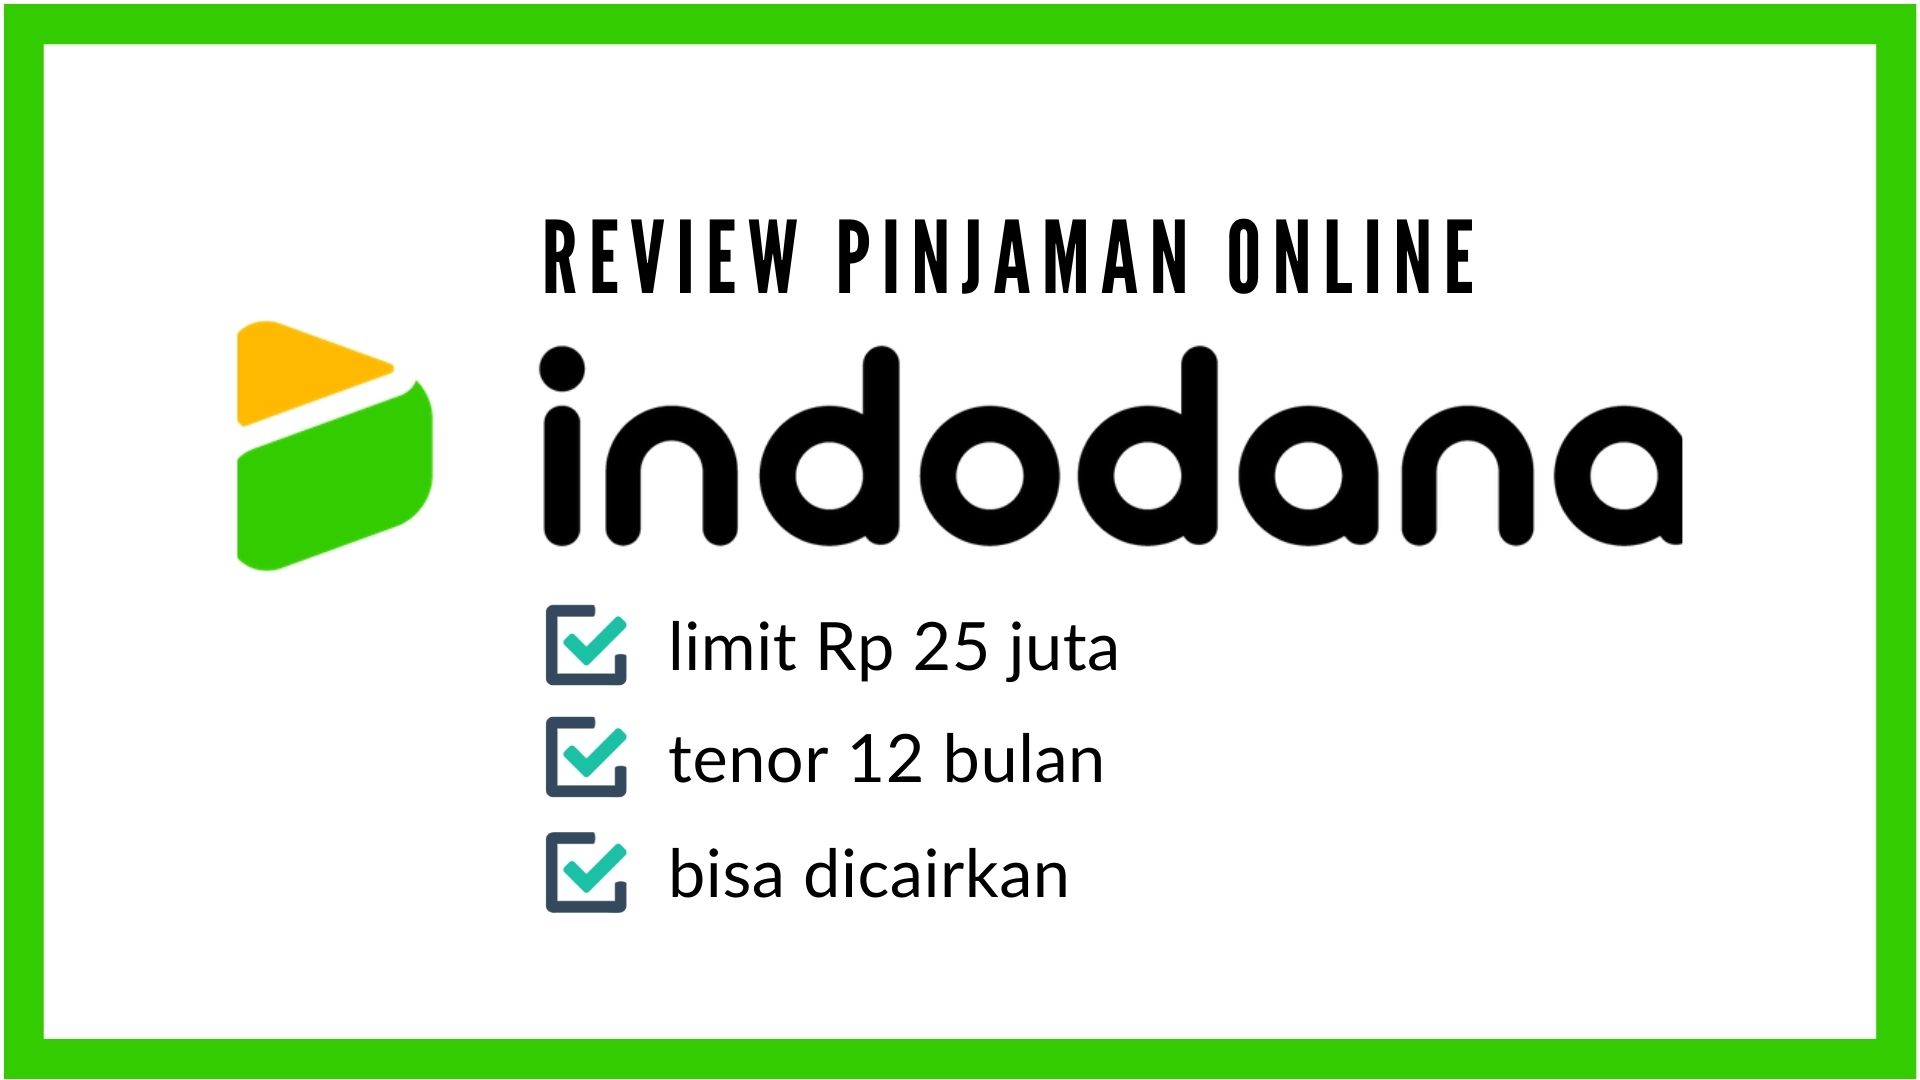 Aplikasi Indodana